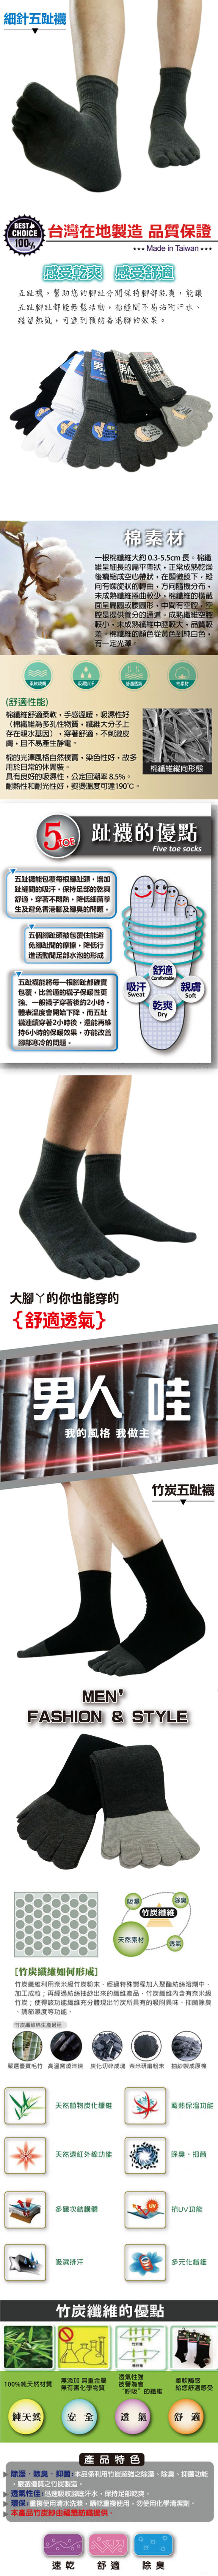 MIT台灣製 加大竹炭五指襪 兩款 (黑、白、灰) 26-29cm